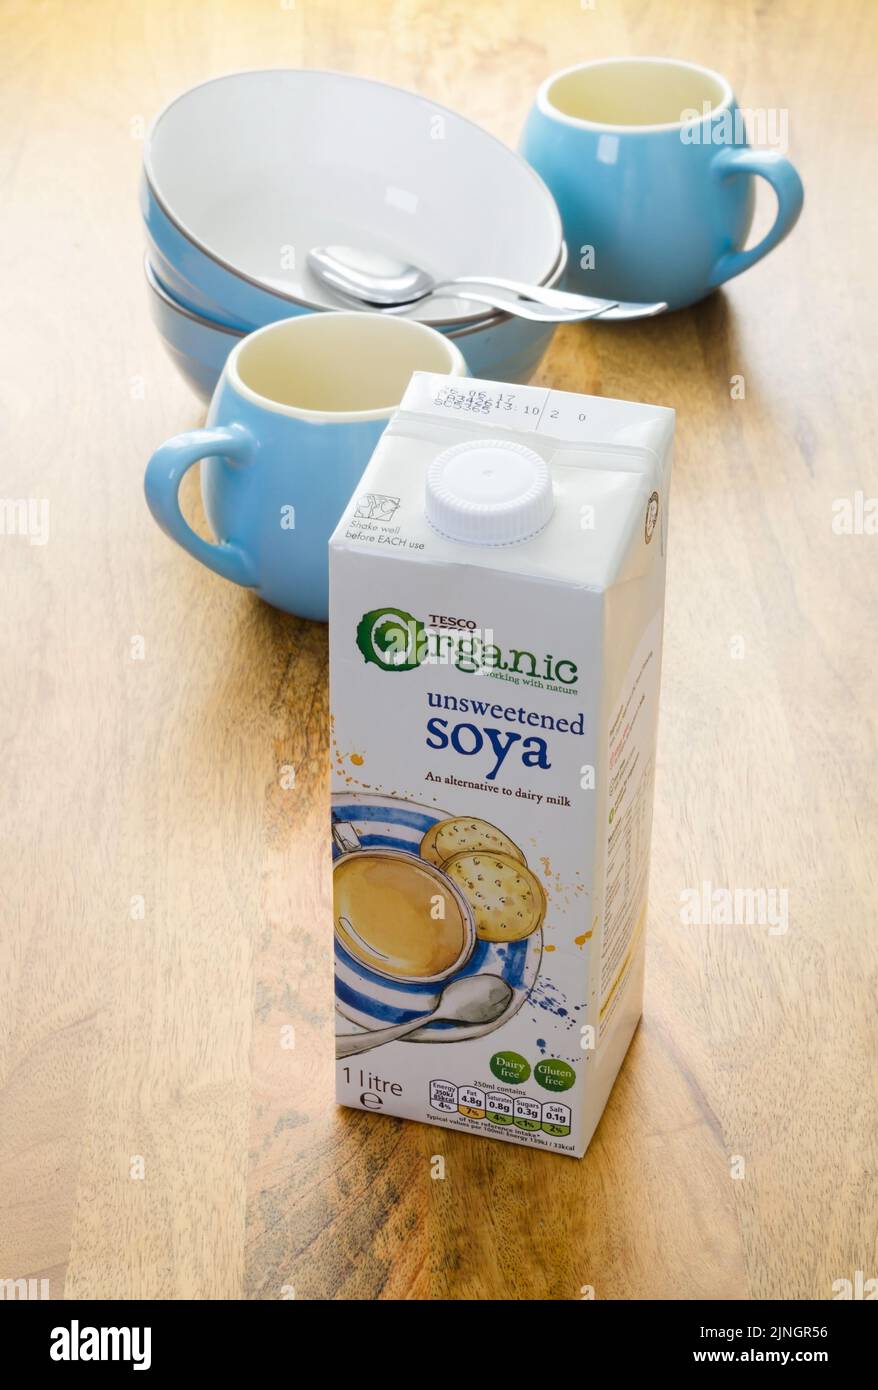 Carton of Tesco own brand organic unsweetened soya milk. Soya milk is a dairy and gluten free altern Stock Photo